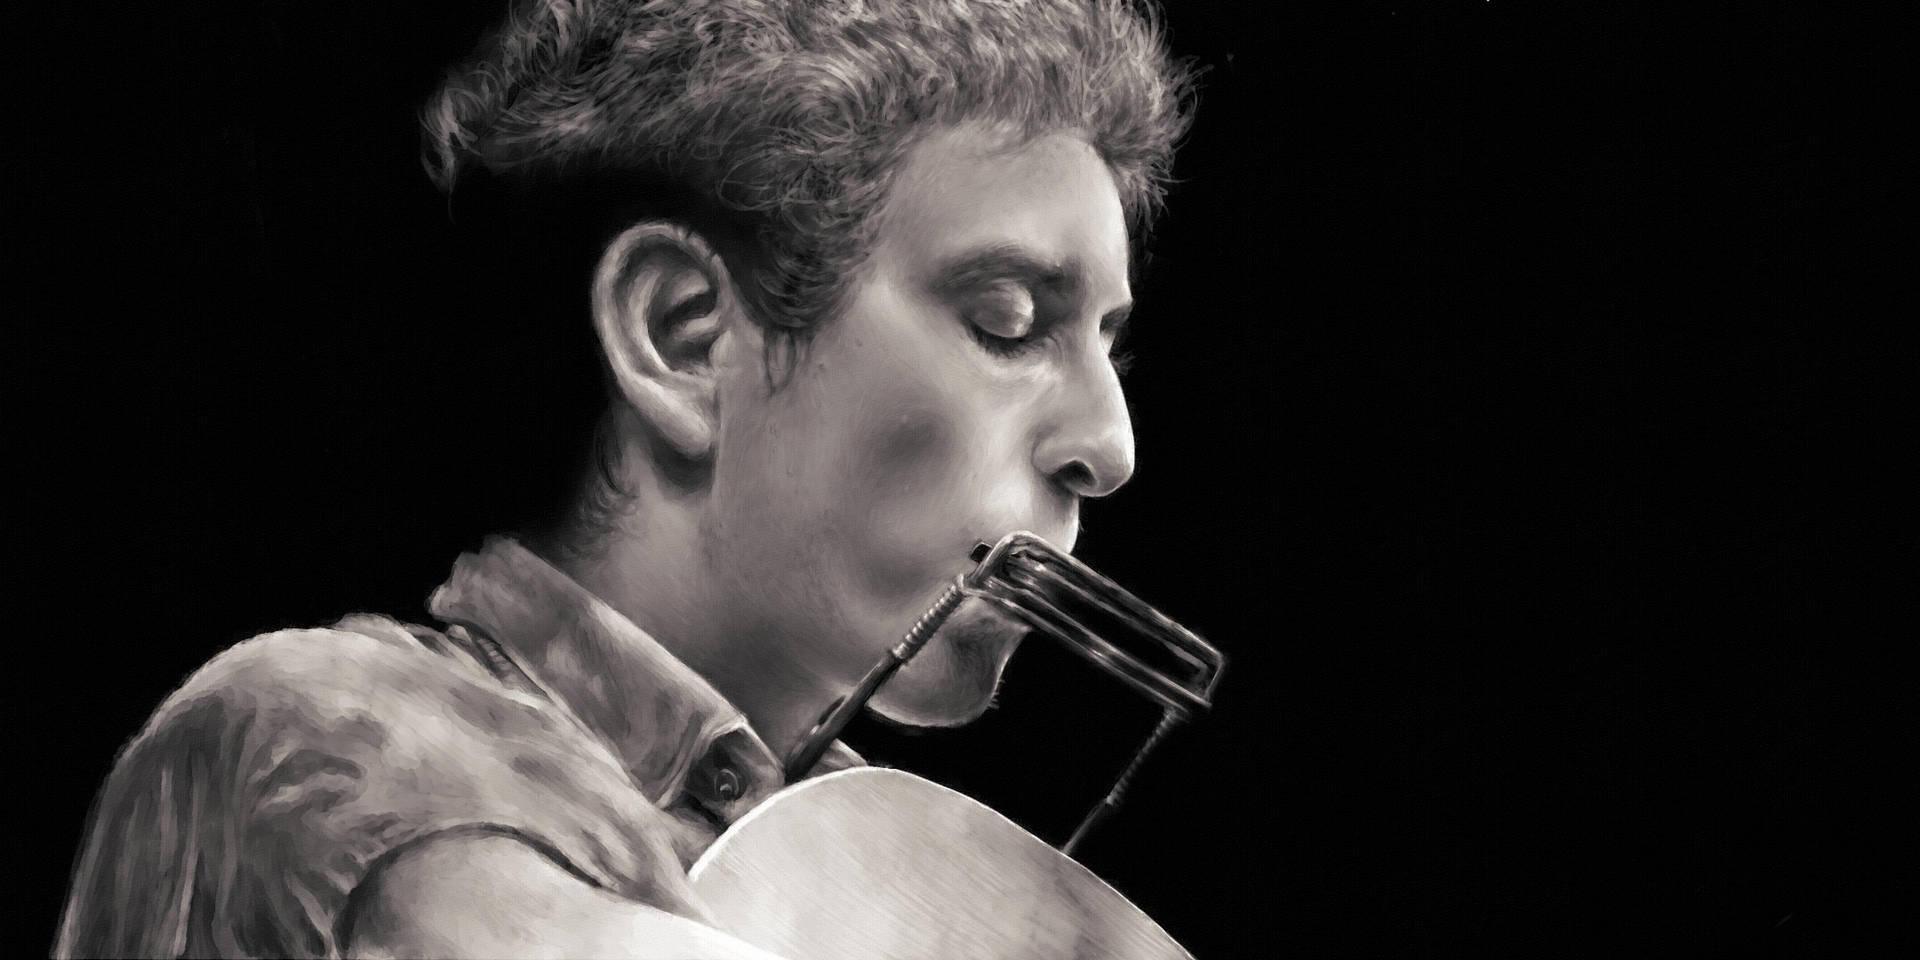 Bob Dylan Performing Retro Photograph Wallpaper